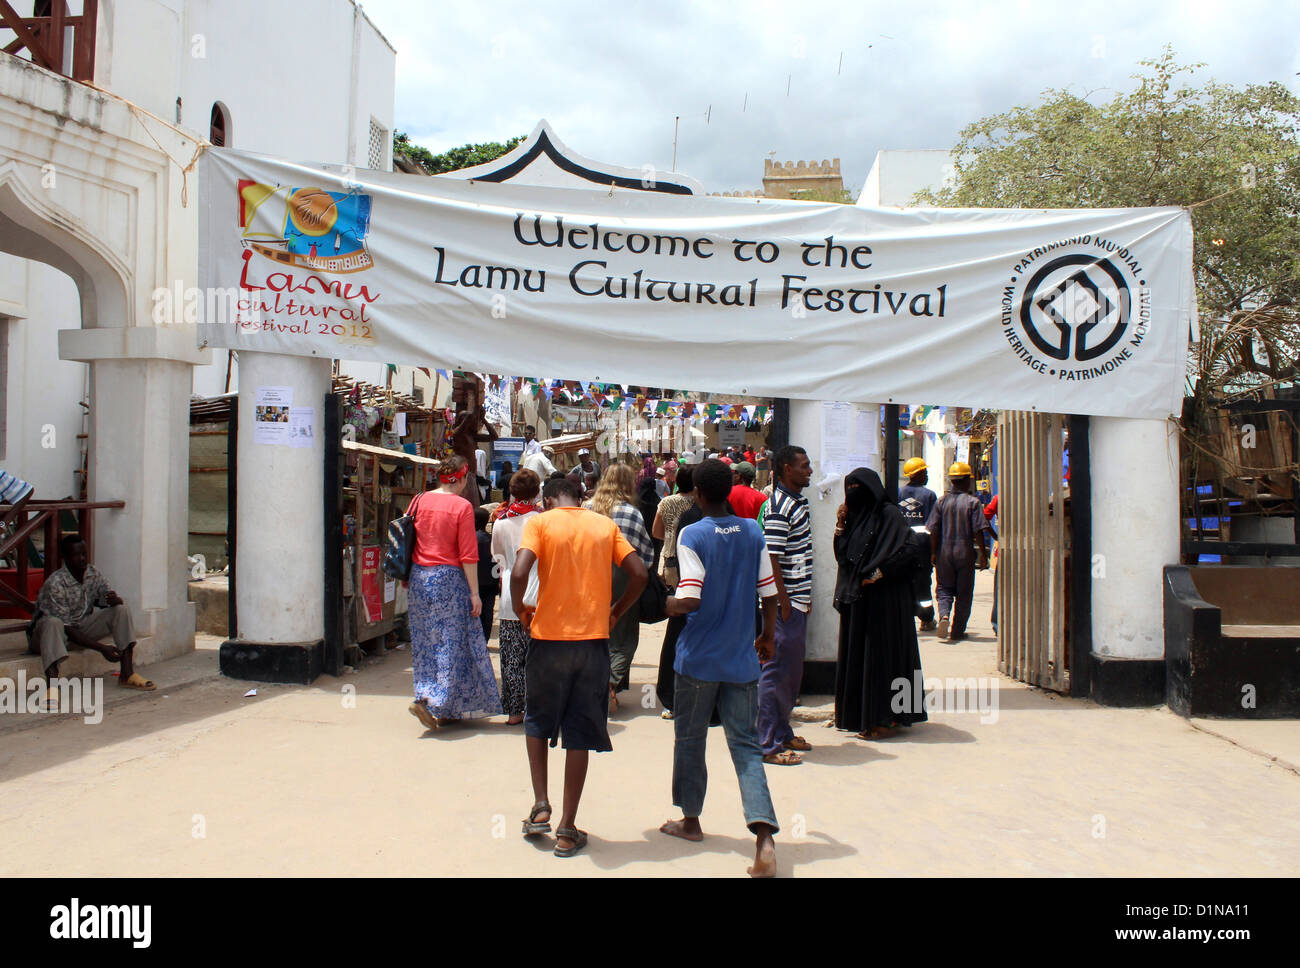 Lamu Cultural Festival, Lamu Island, Kenya, East Africa Stock Photo